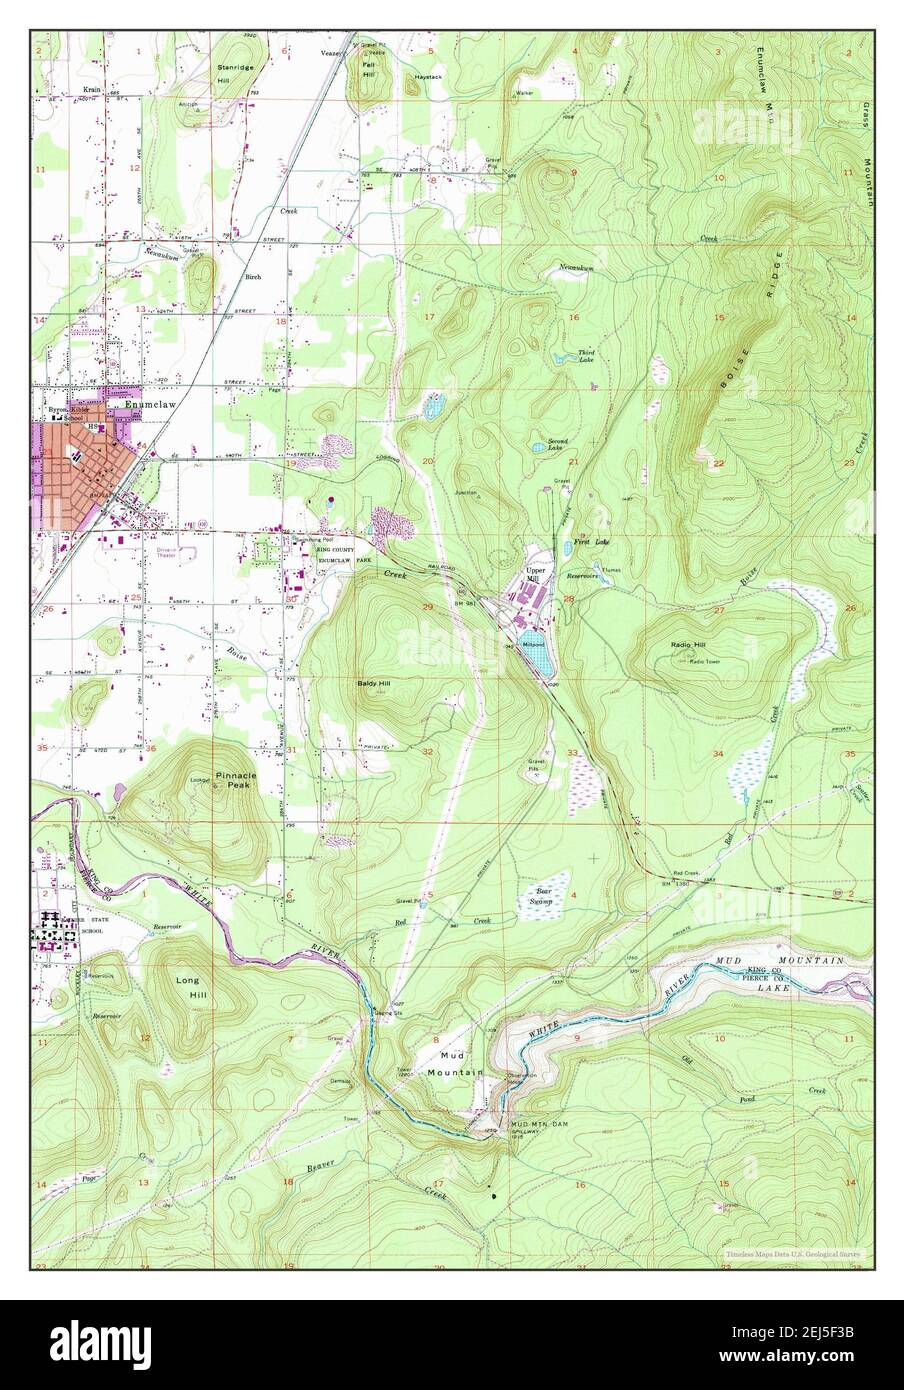 Enumclaw Washington Mappa 1956 1 24000 Stati Uniti D America Da Timeless Maps Dati U S Geological Survey 2ej5f3b 